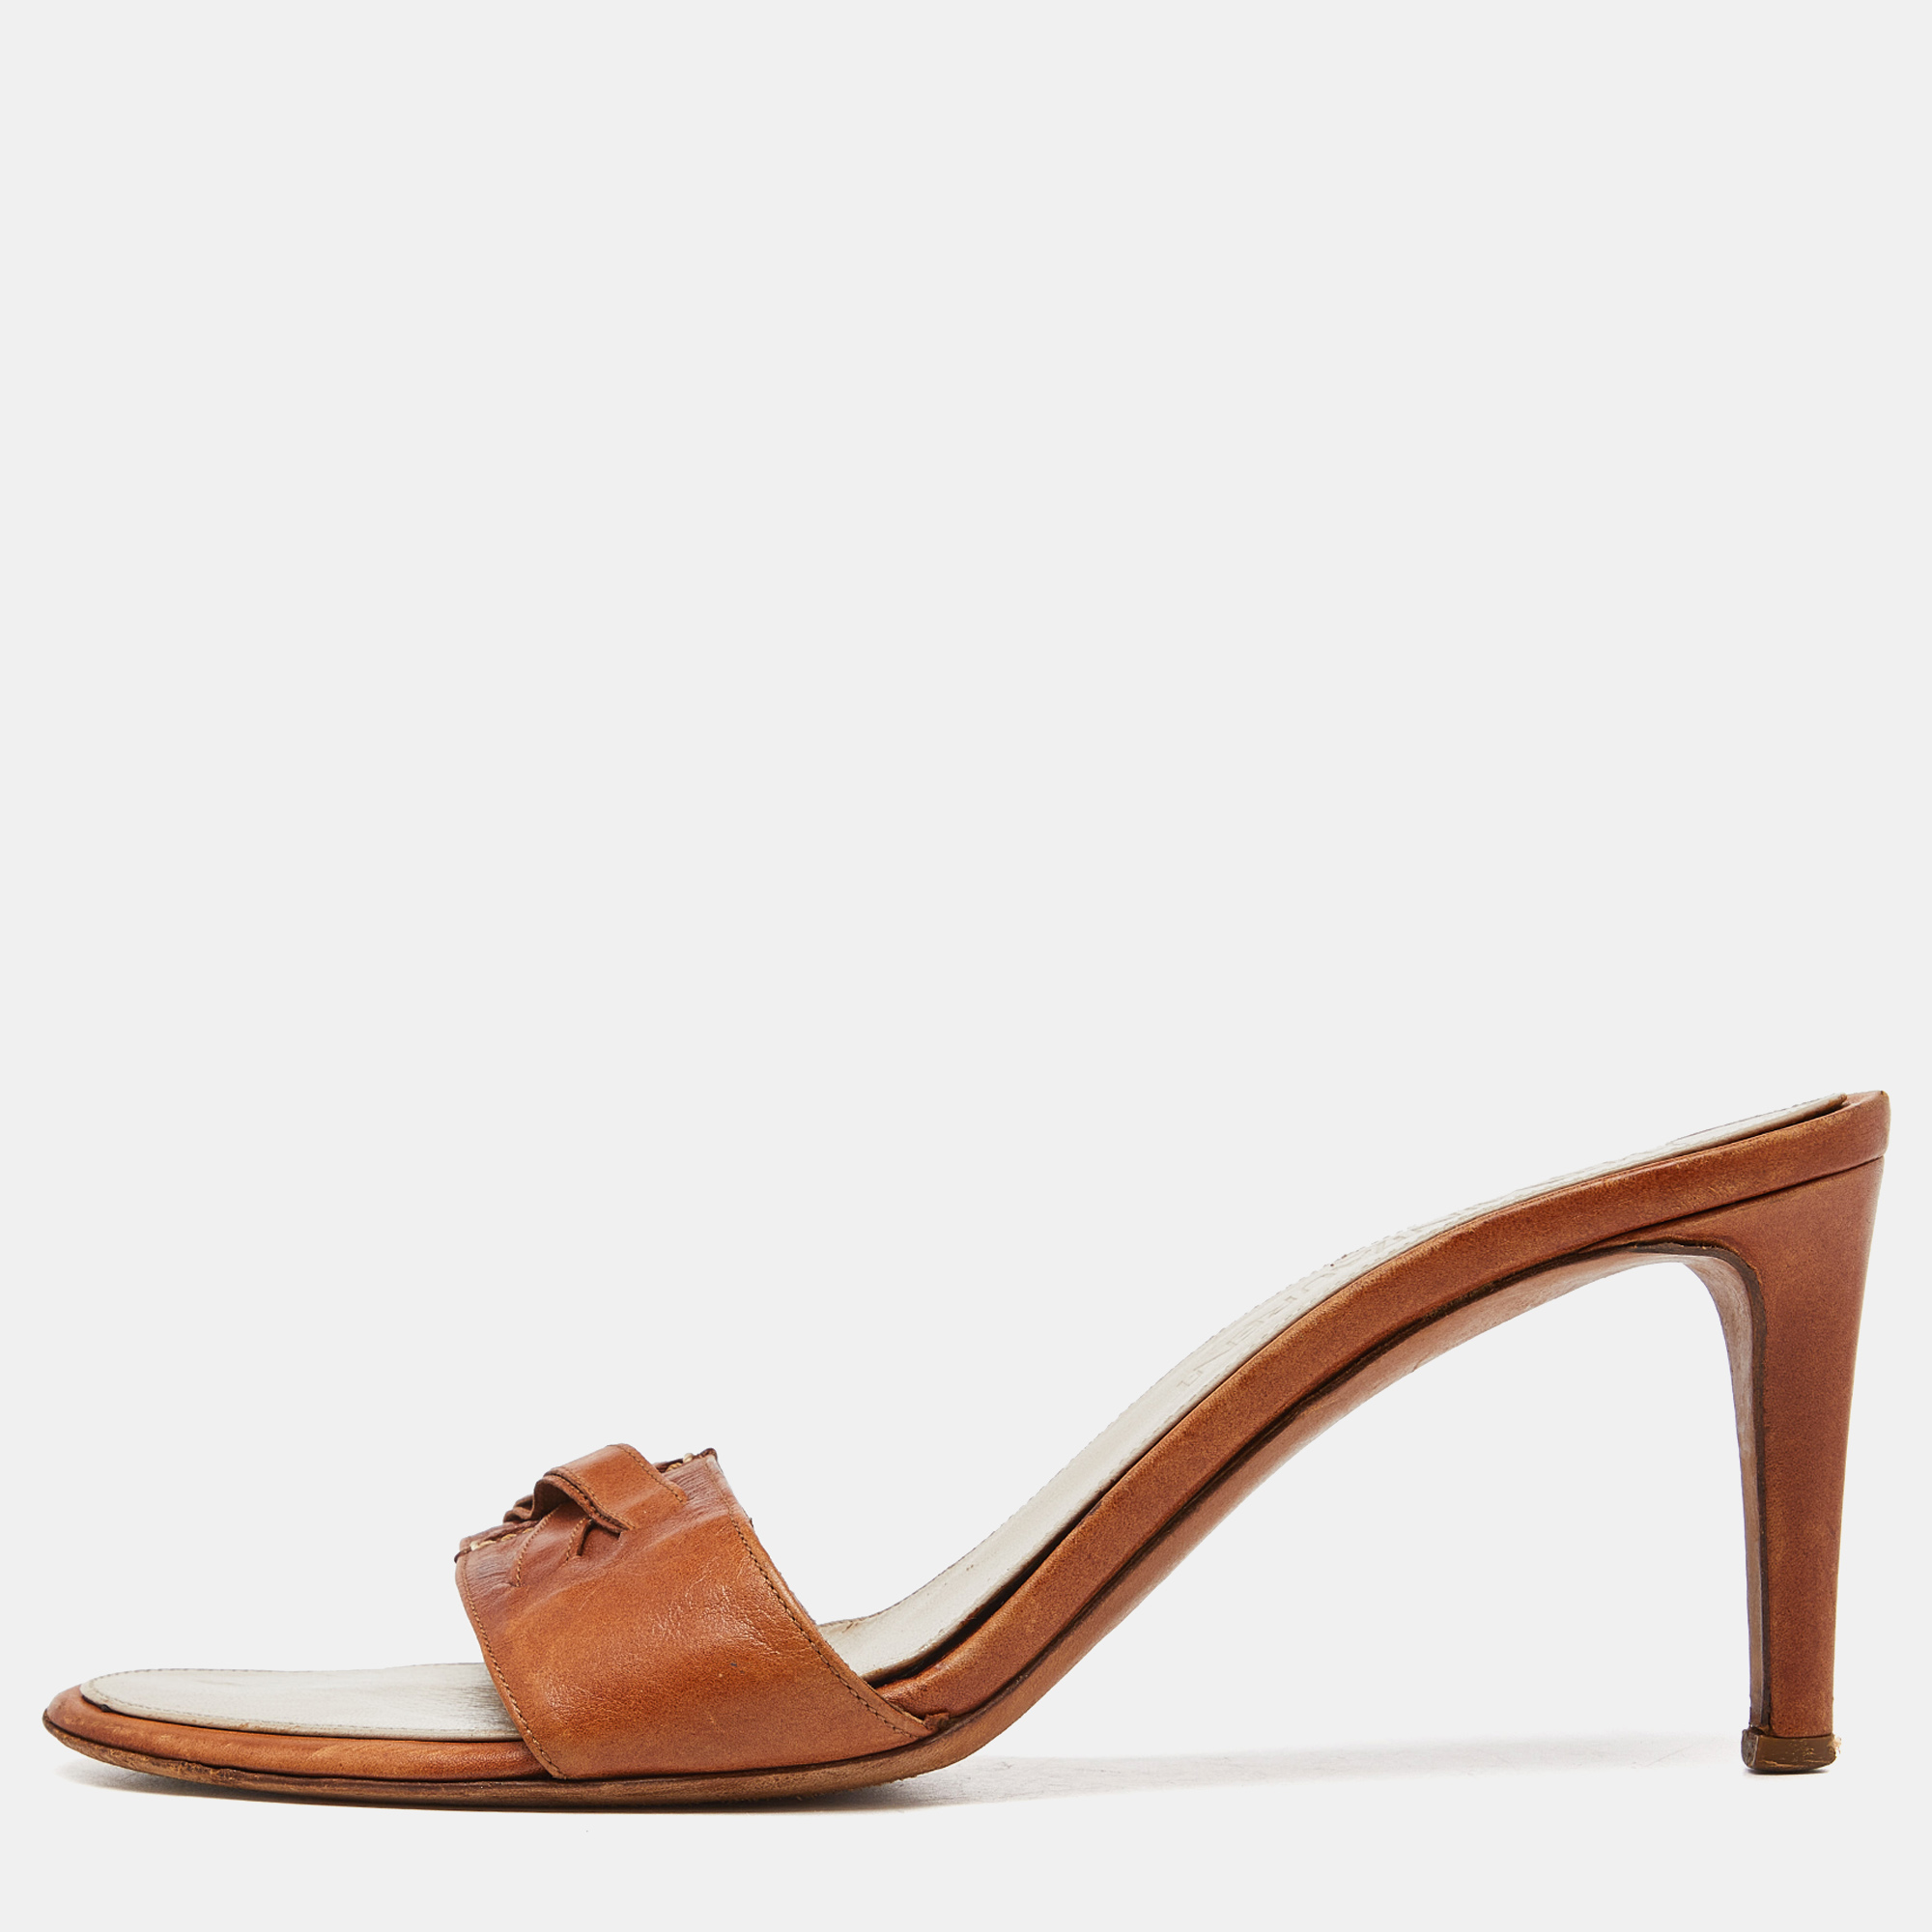 Yves saint laurent brown leather open toe slide sandals size 38.5